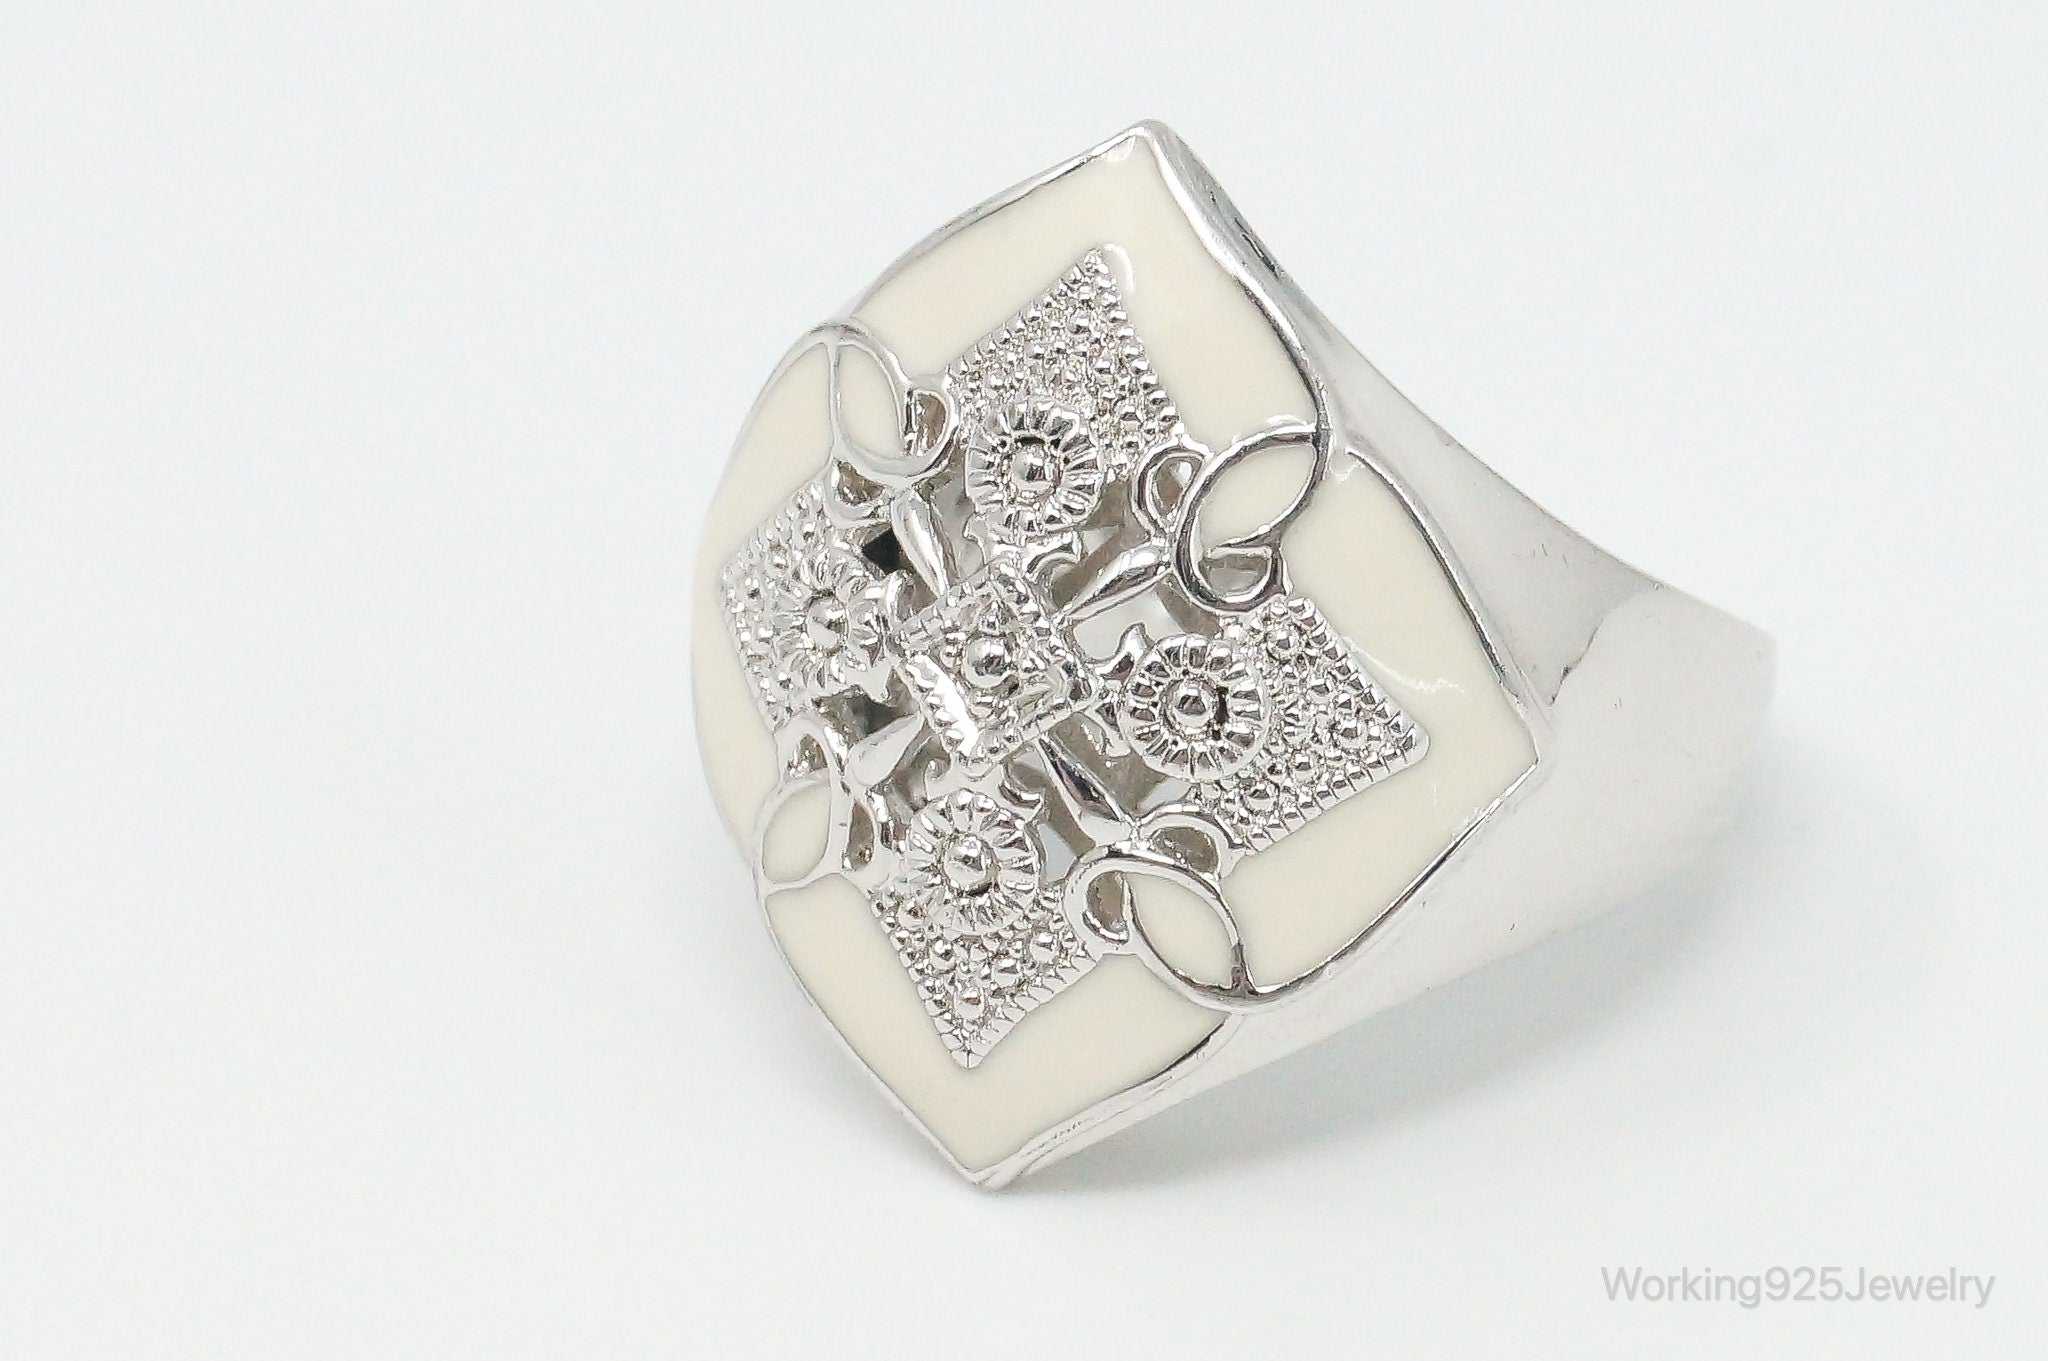 Vintage Designer Art Deco White Enamel Sterling Silver Ring - Size 7.25